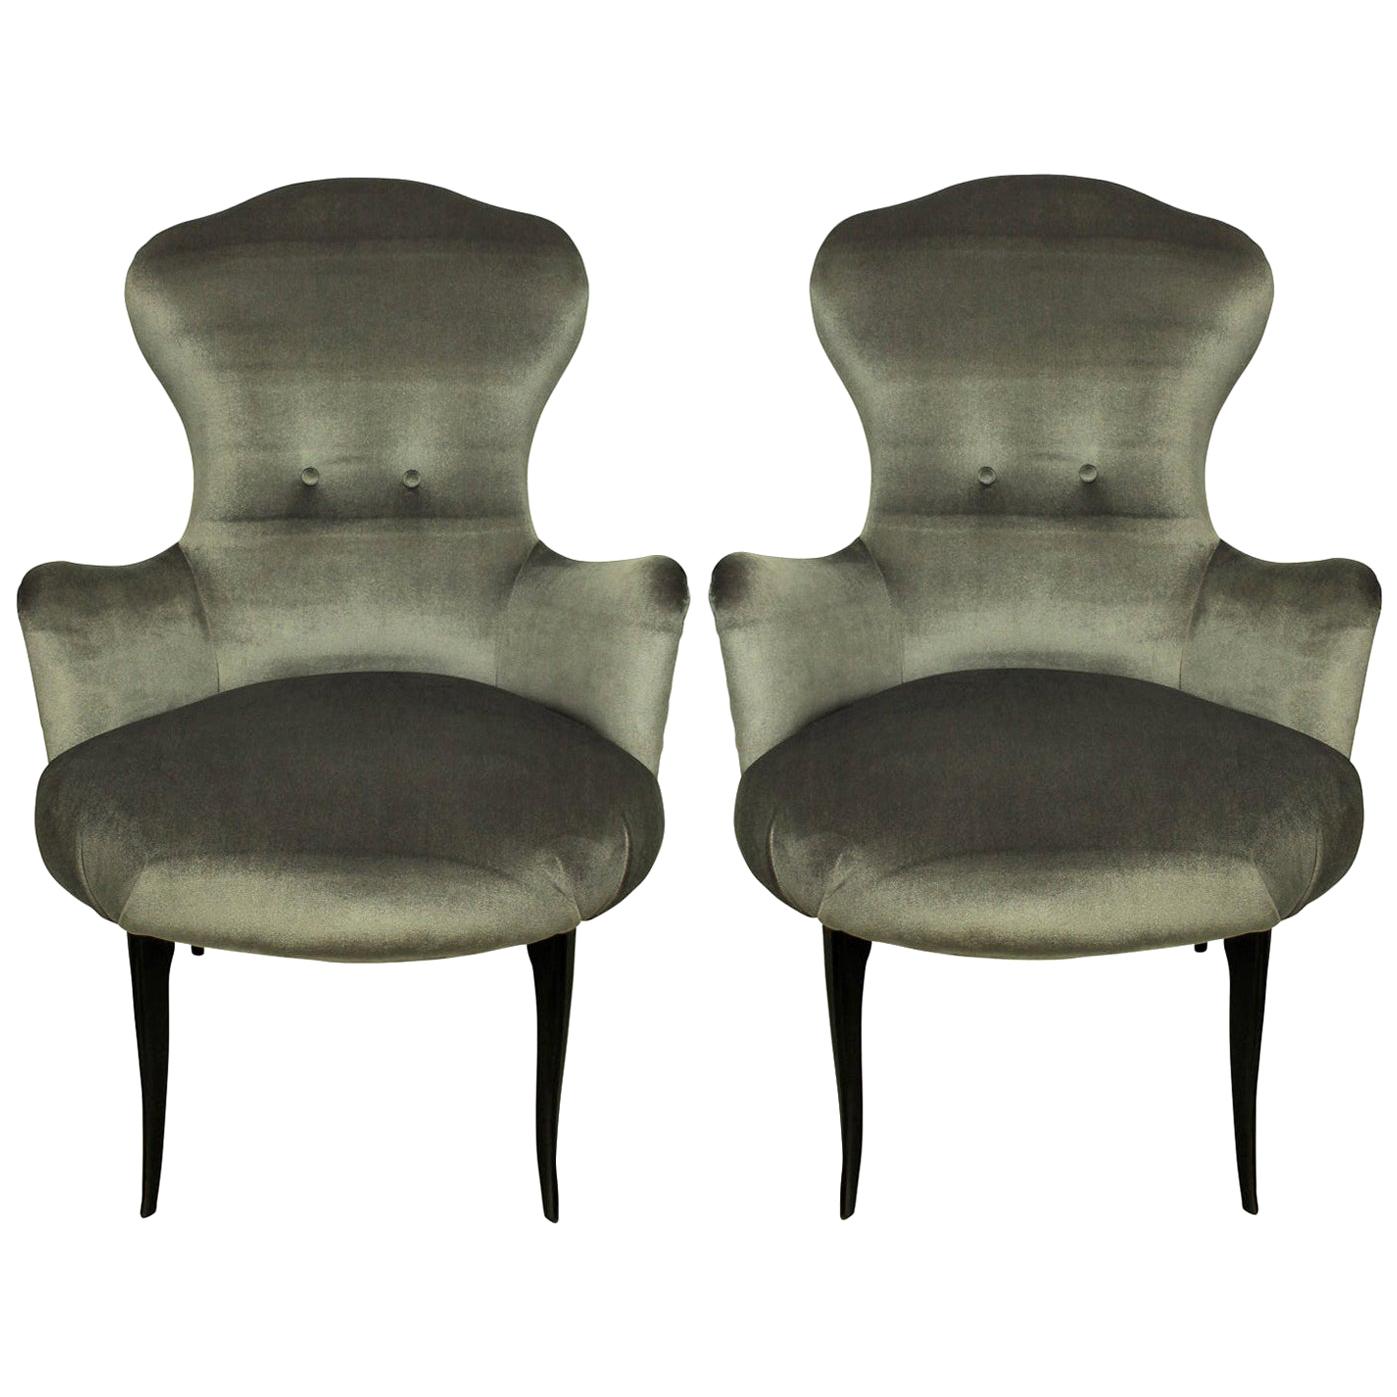 Midcentury Italian Bedroom Chairs in Silver Velvet